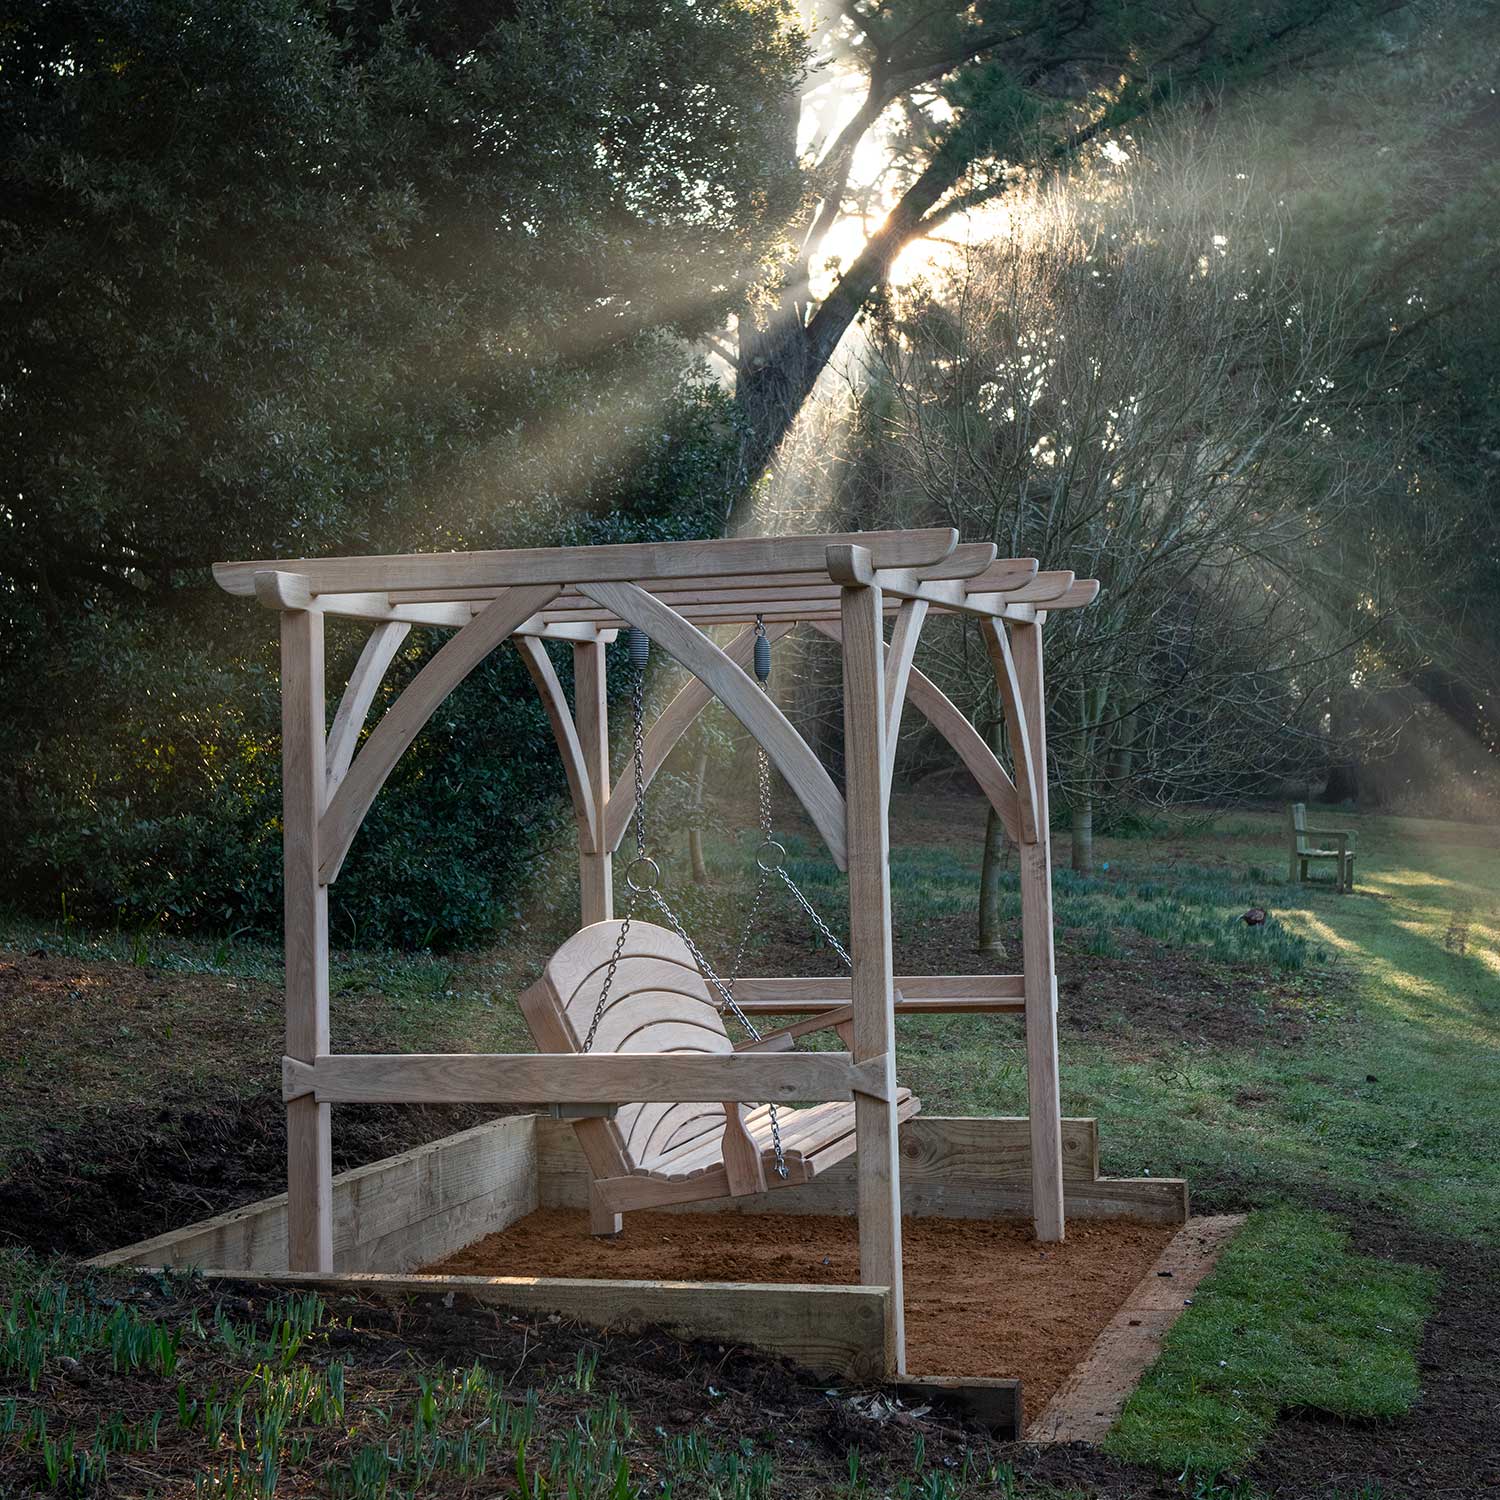 Sitting Spiritually Swing Seat in the arboretum at Abbotsbury Subtropical Gardens